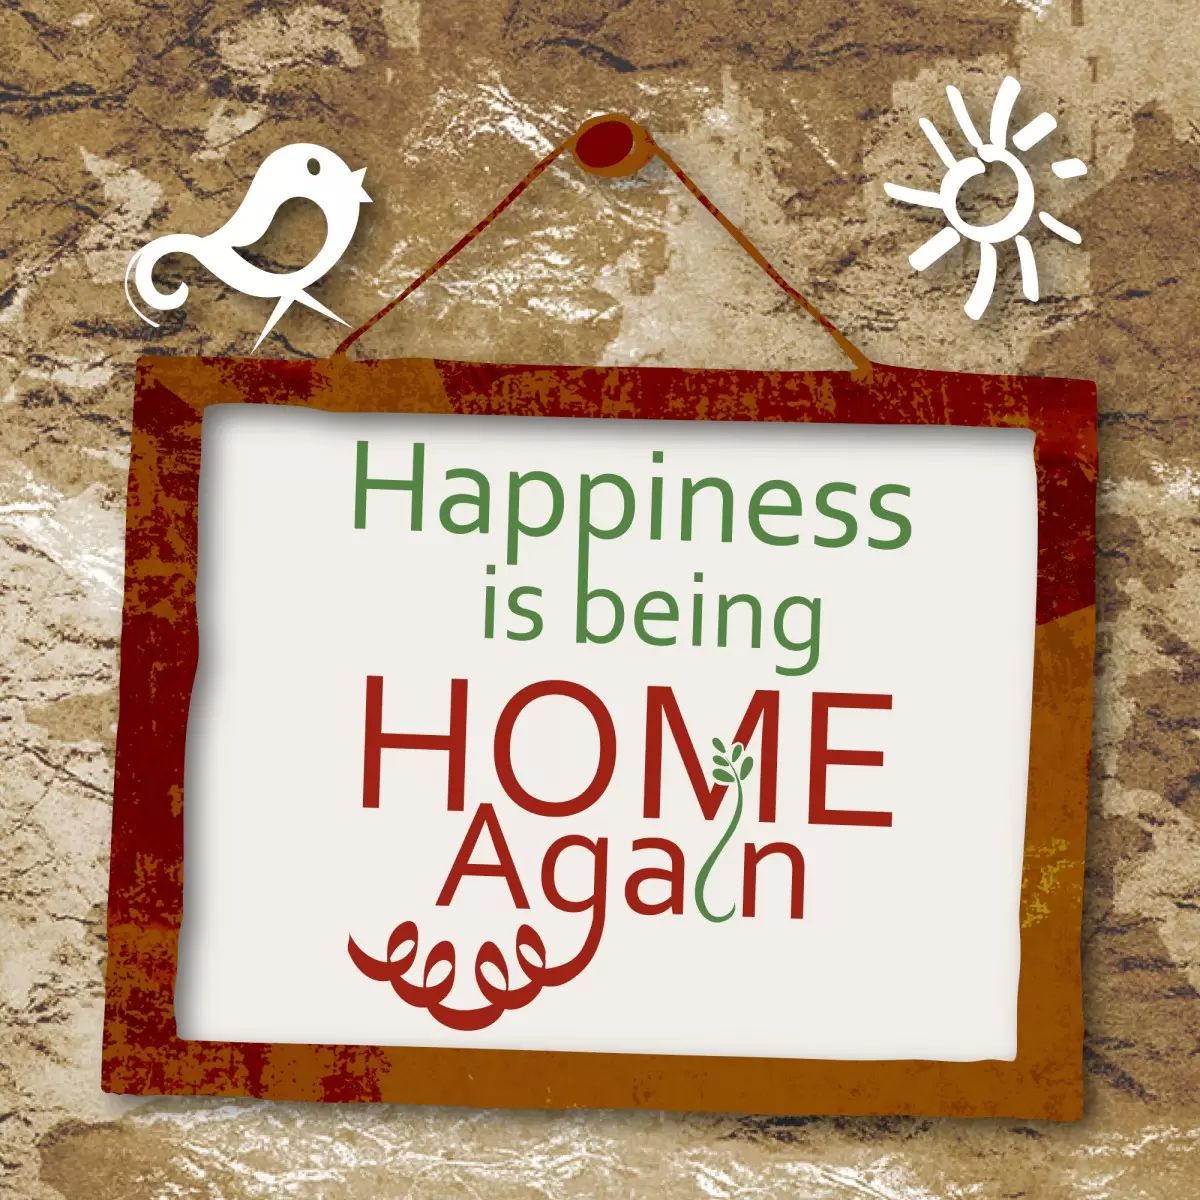 Happiness Being Home - מסגרת עיצובים - תמונות וינטג' לסלון טיפוגרפיה דקורטיבית  - מק''ט: 240725